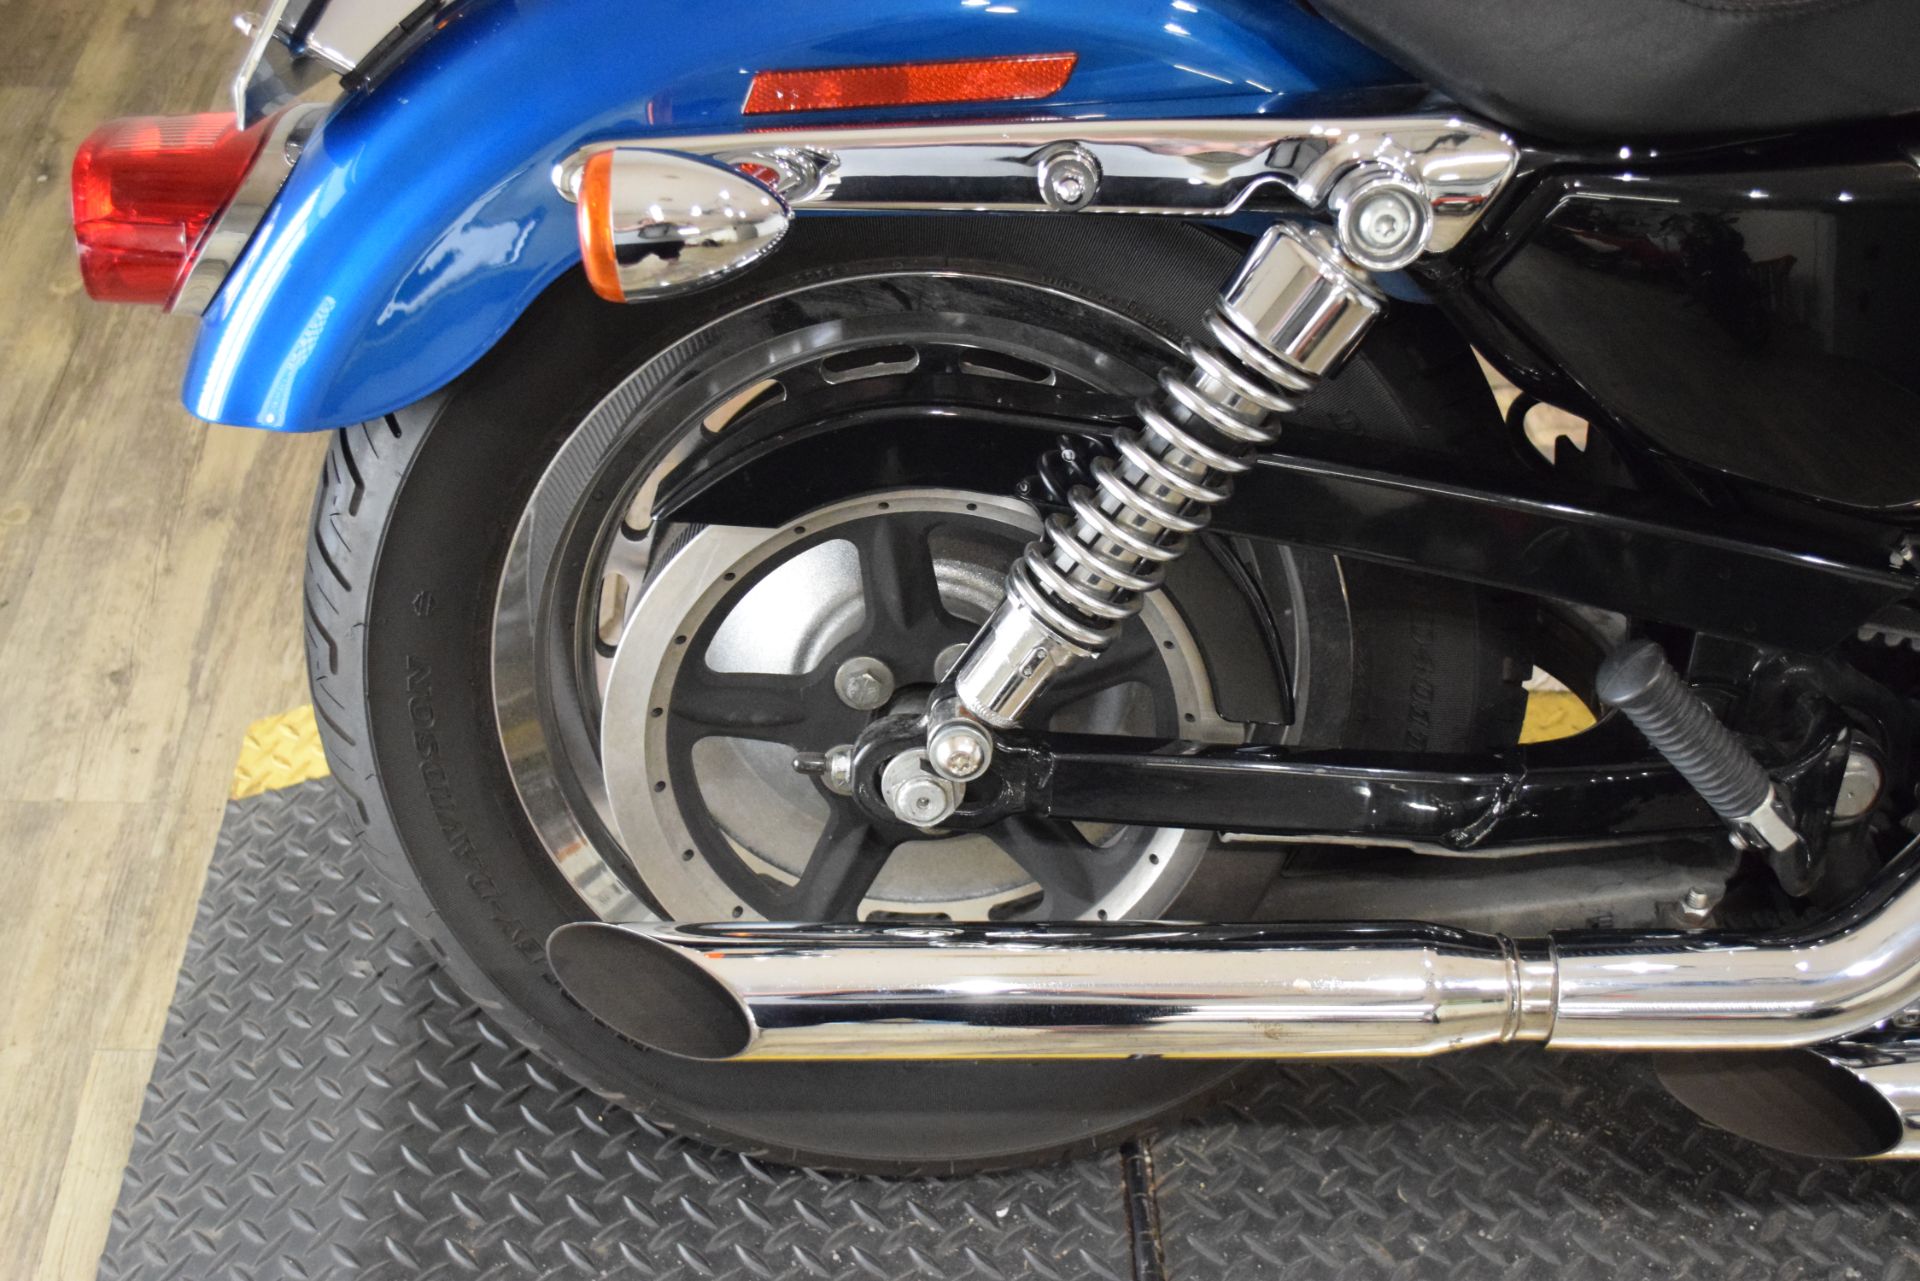 2005 Harley-Davidson Sportster® XL 1200 Custom in Wauconda, Illinois - Photo 8